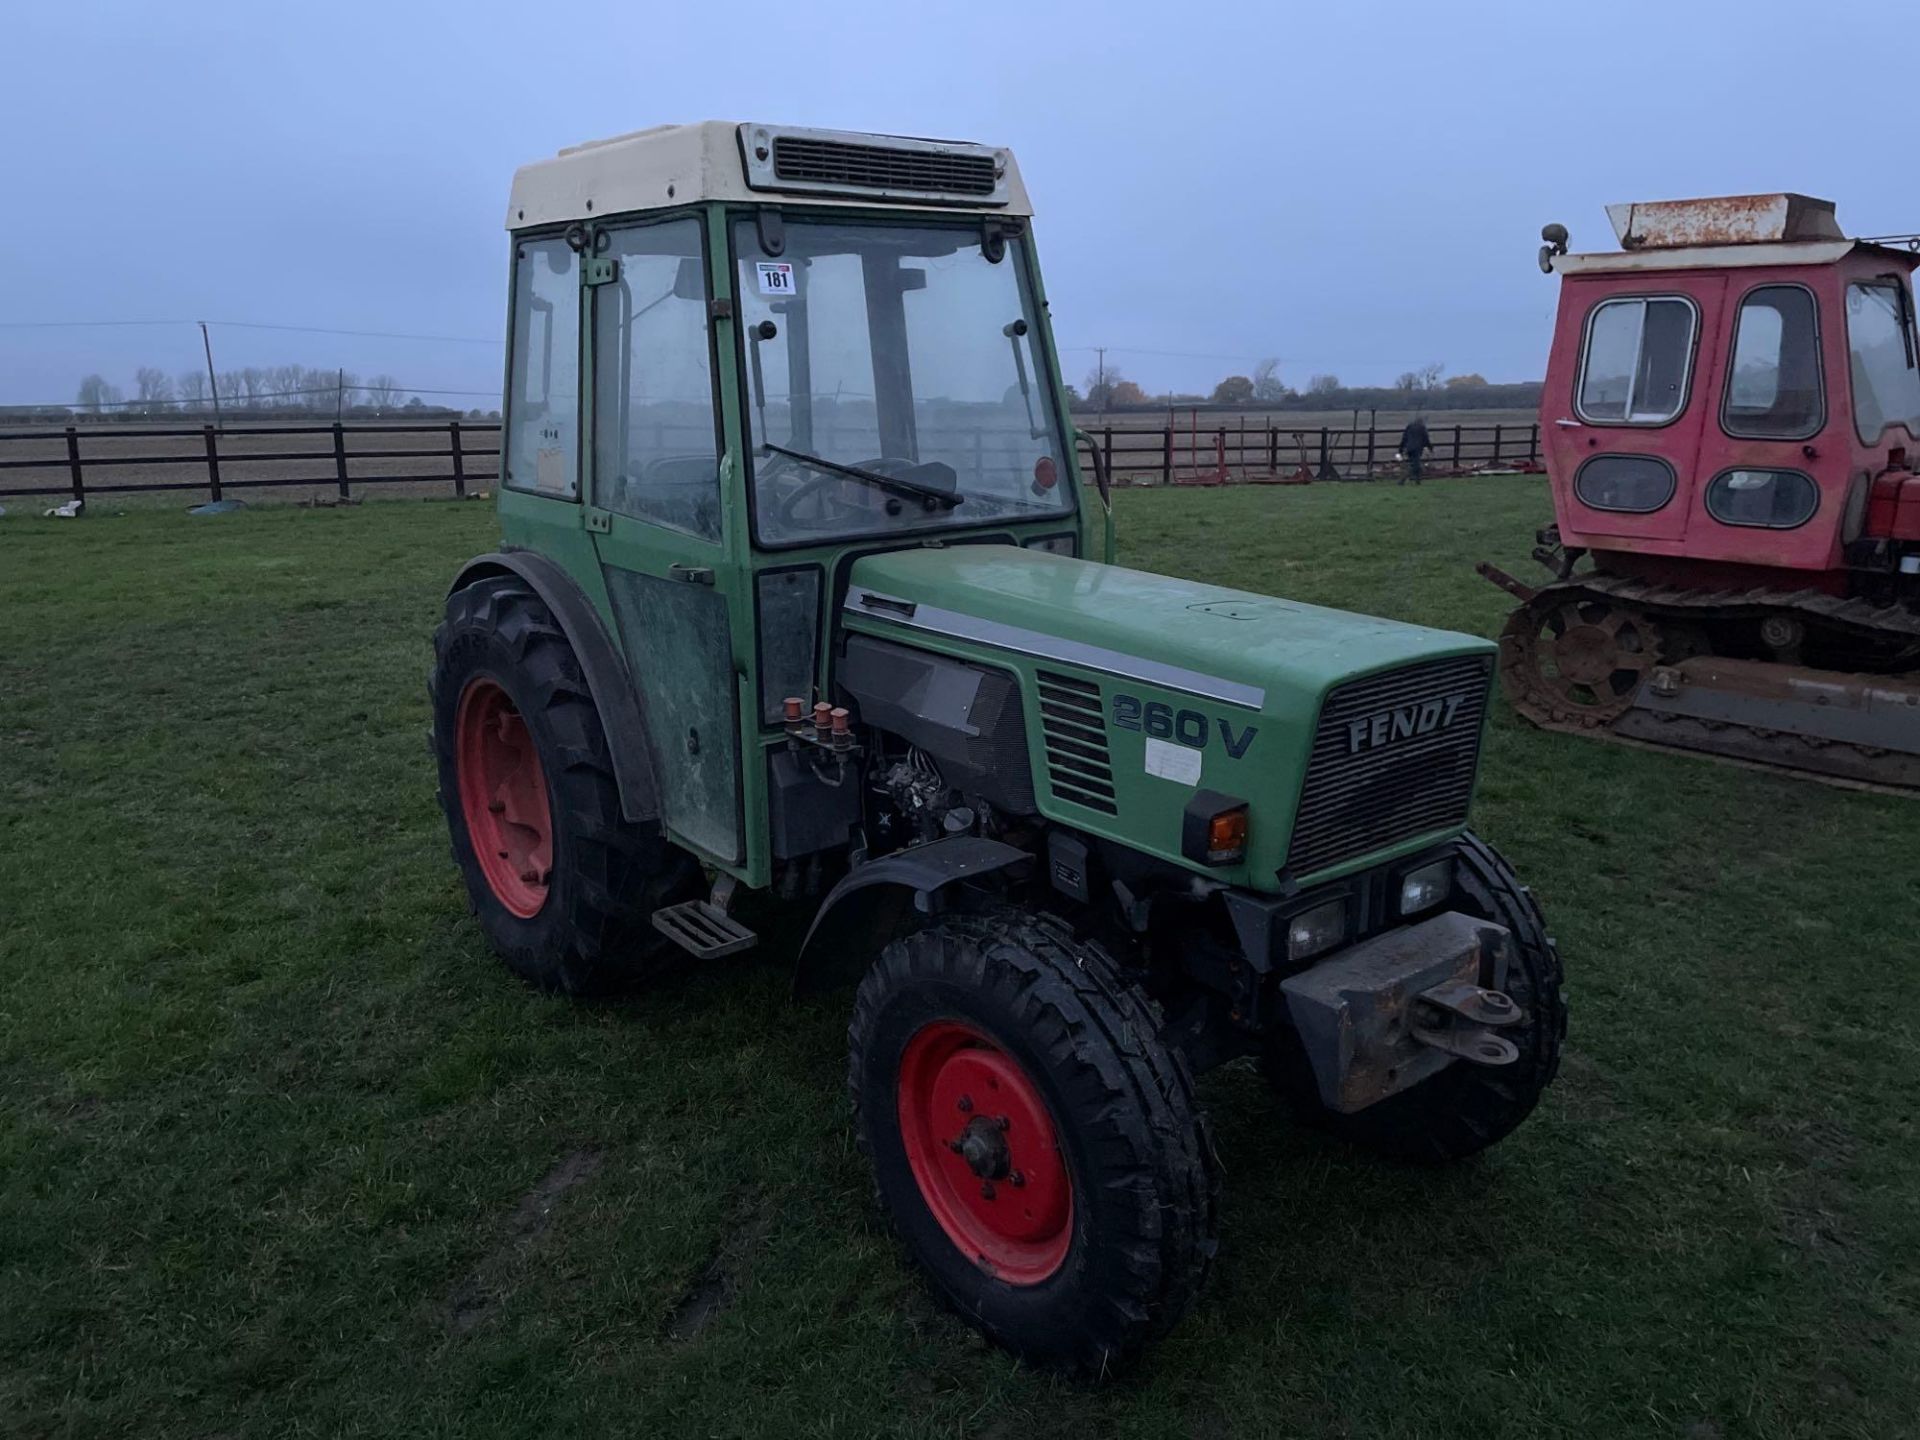 1989 Fendt 260V 2wd diesel vineyard tractor on Fulda 7.50/16SL front and Pirelli 340/85R24 rear whee - Image 15 of 15